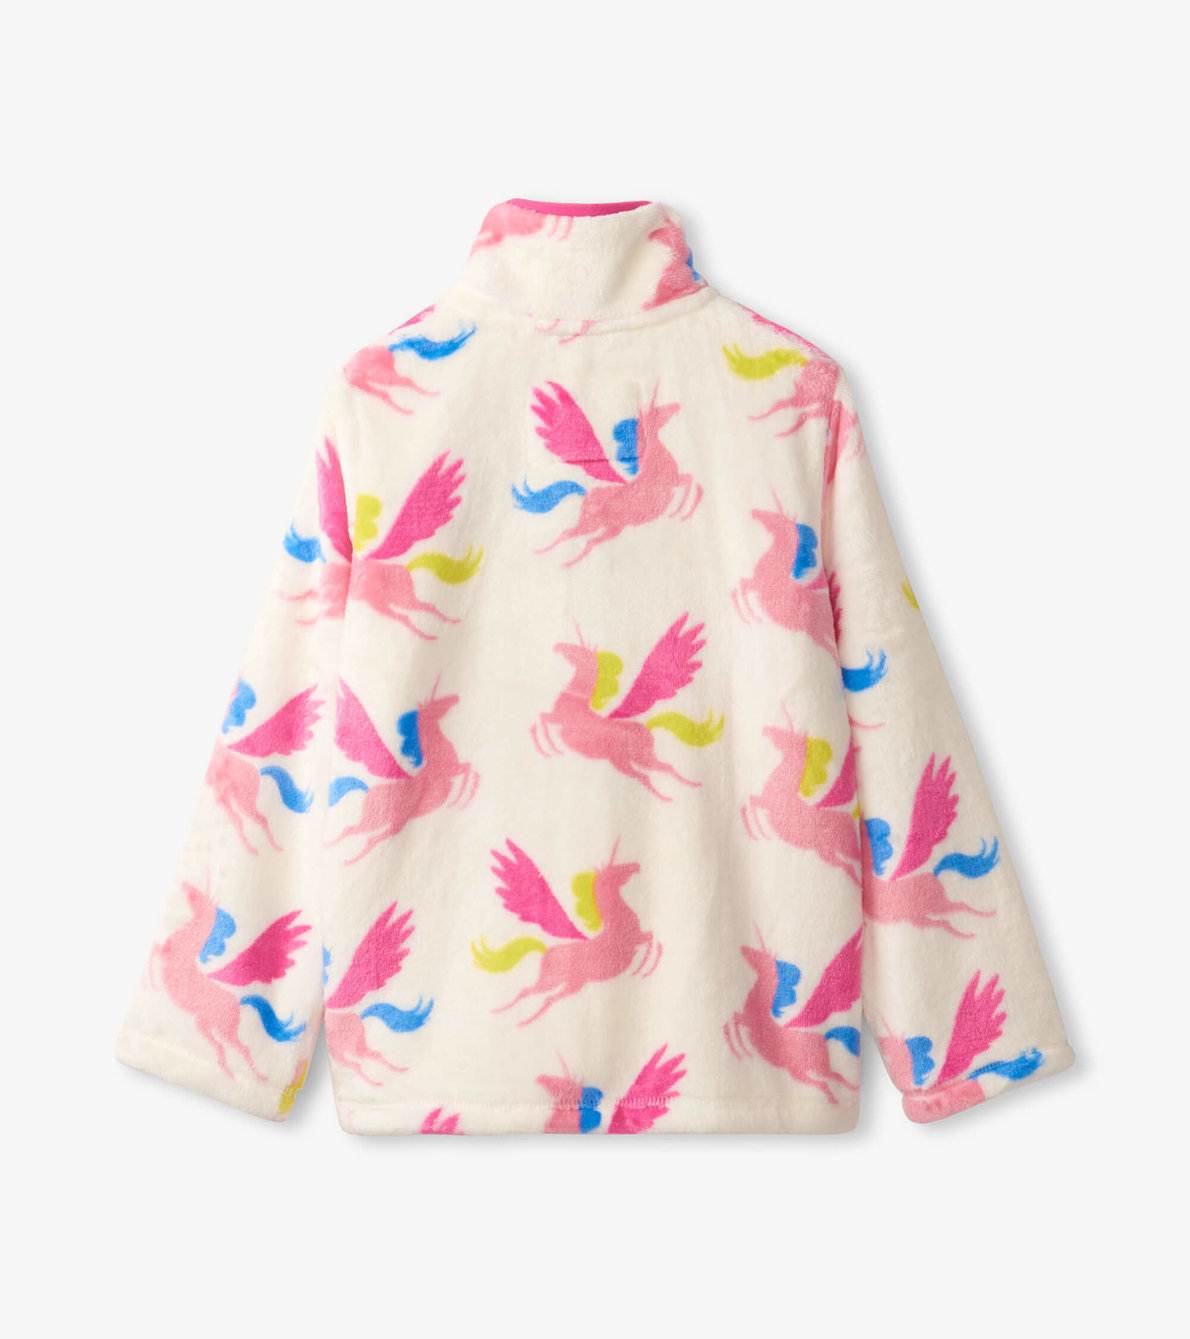 View larger image of Girls Unicorn Fleece Jacket